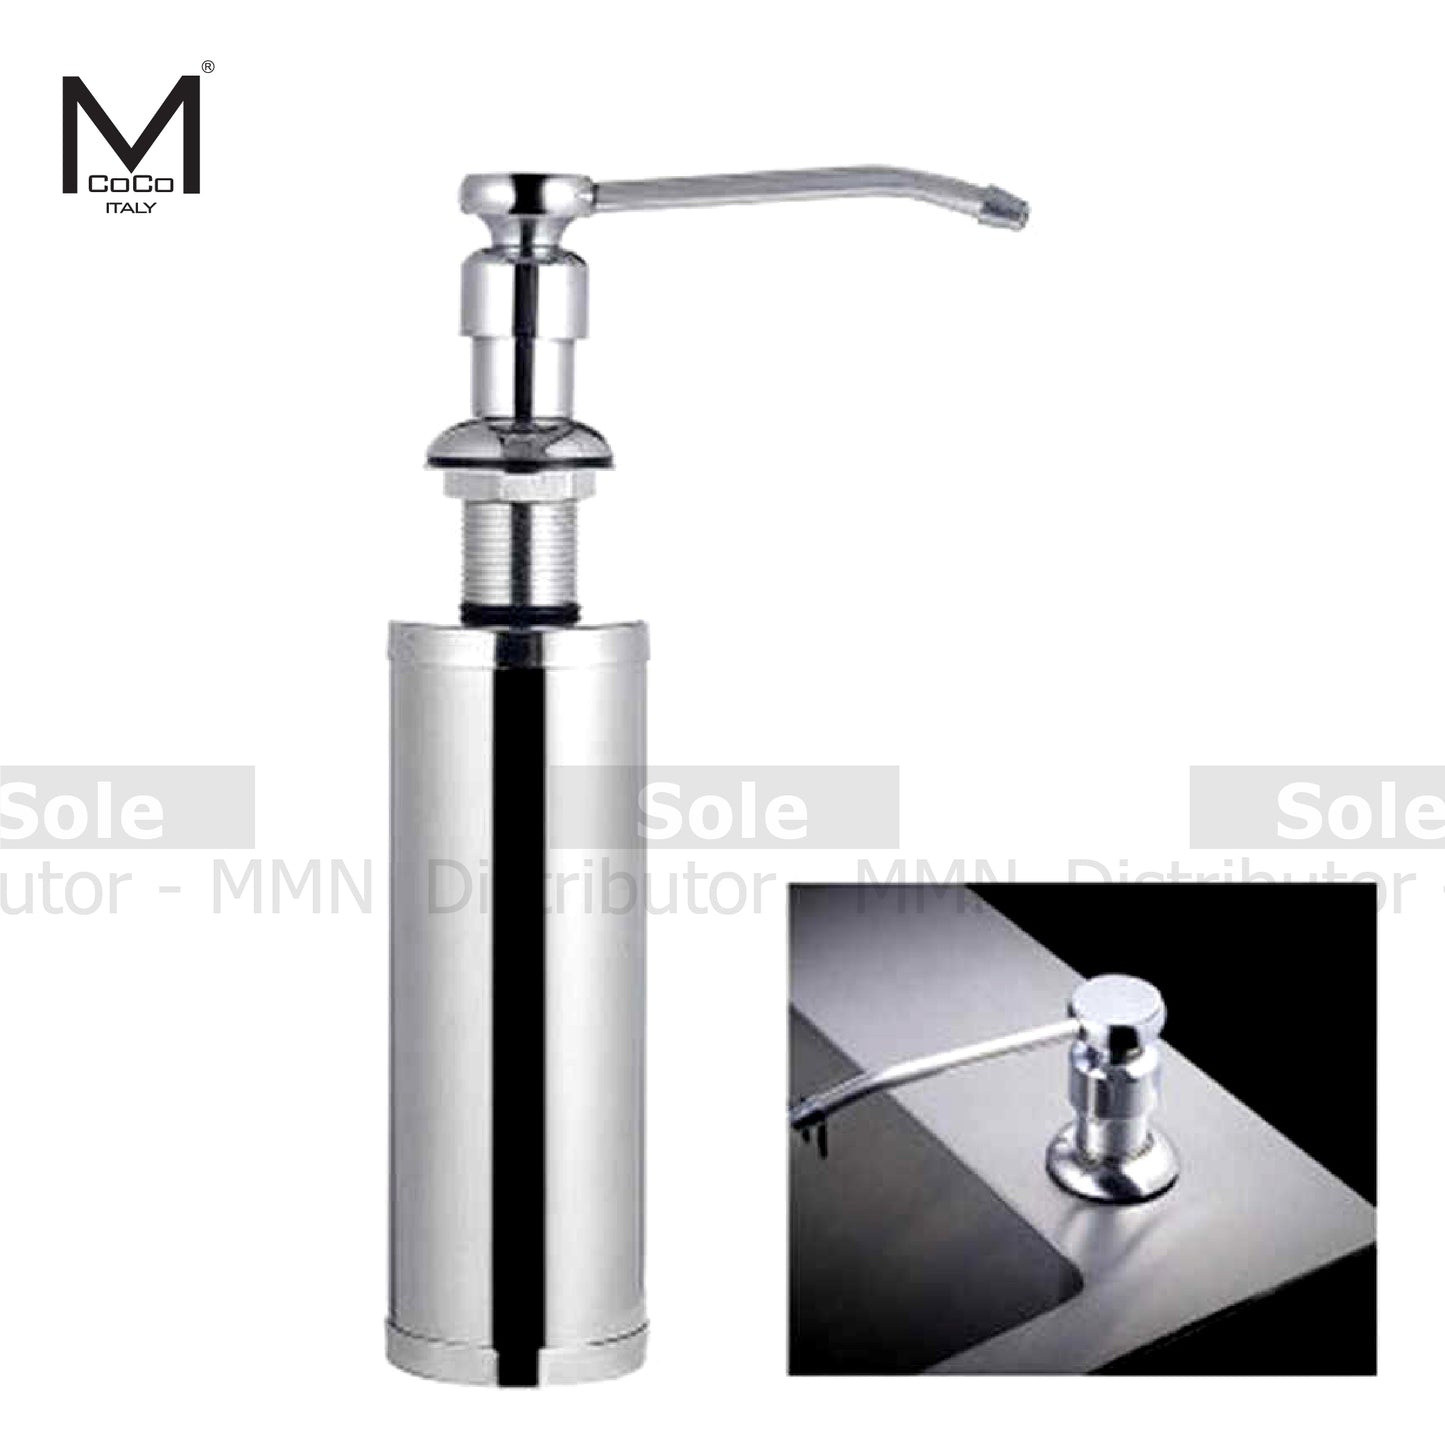 Mcoco Sink Soap Dispenser 250ml Press Type Chrome Plated - SDI